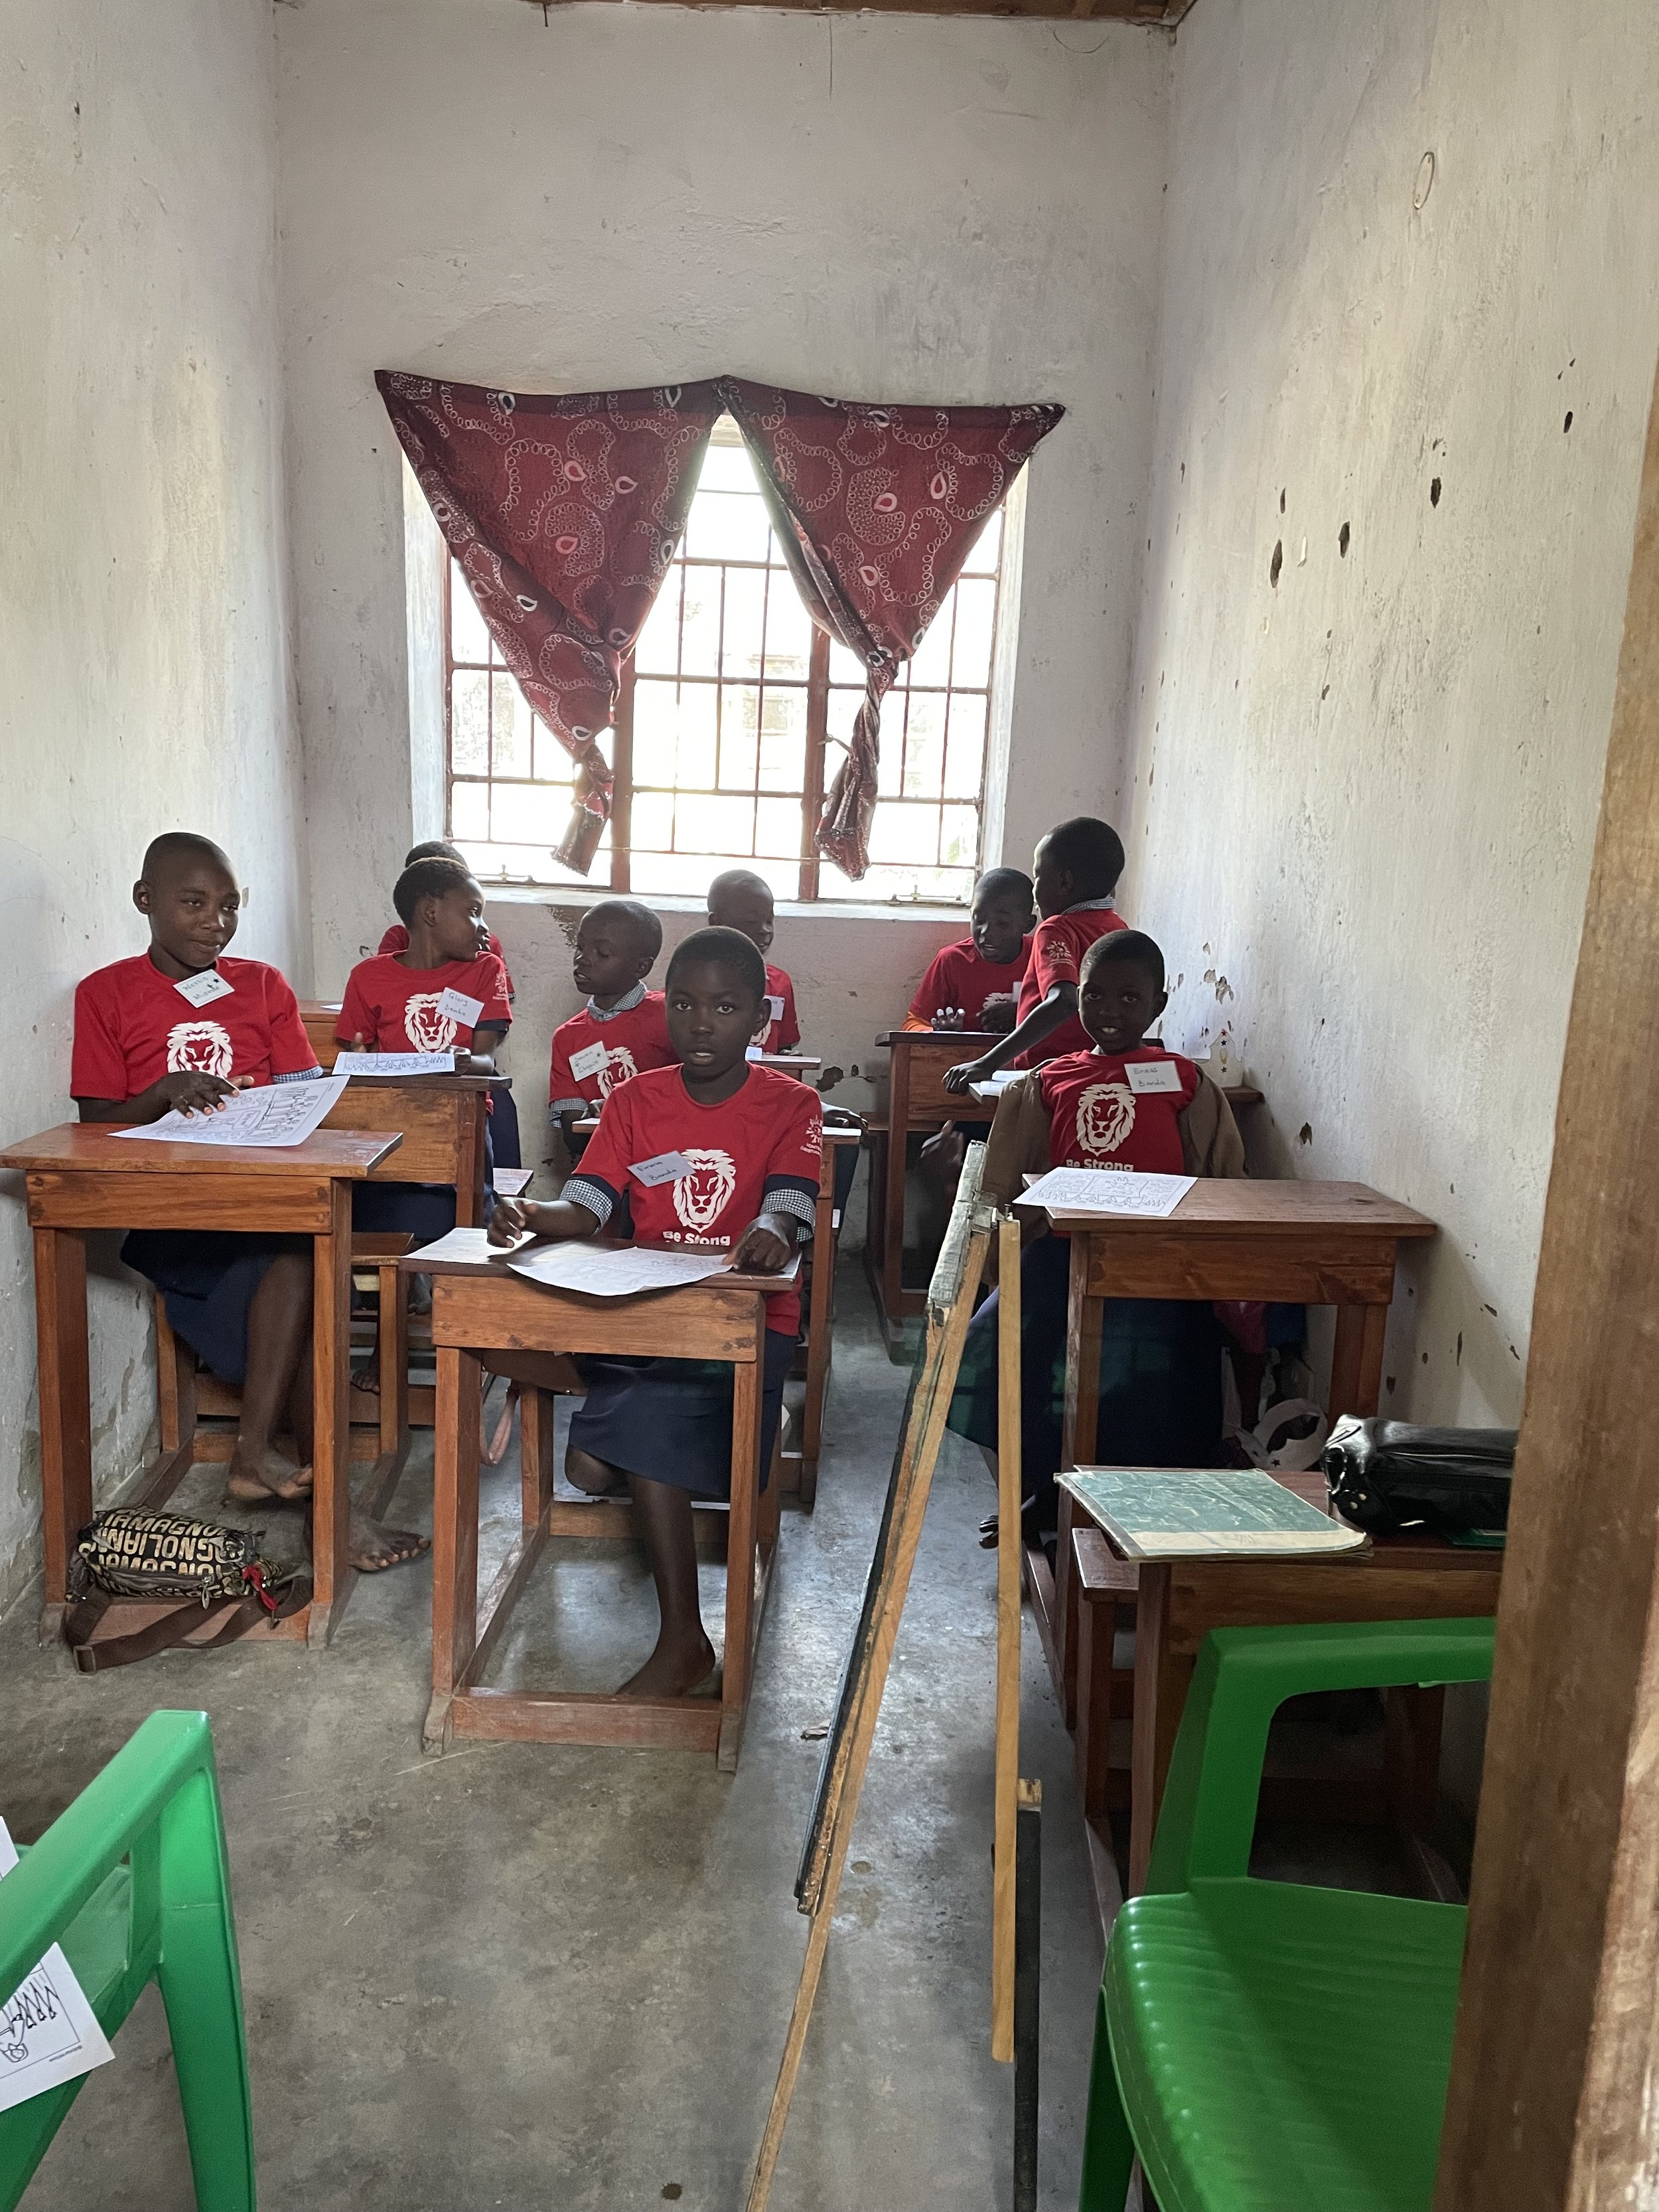 Malawi Camp Classroom.jpg